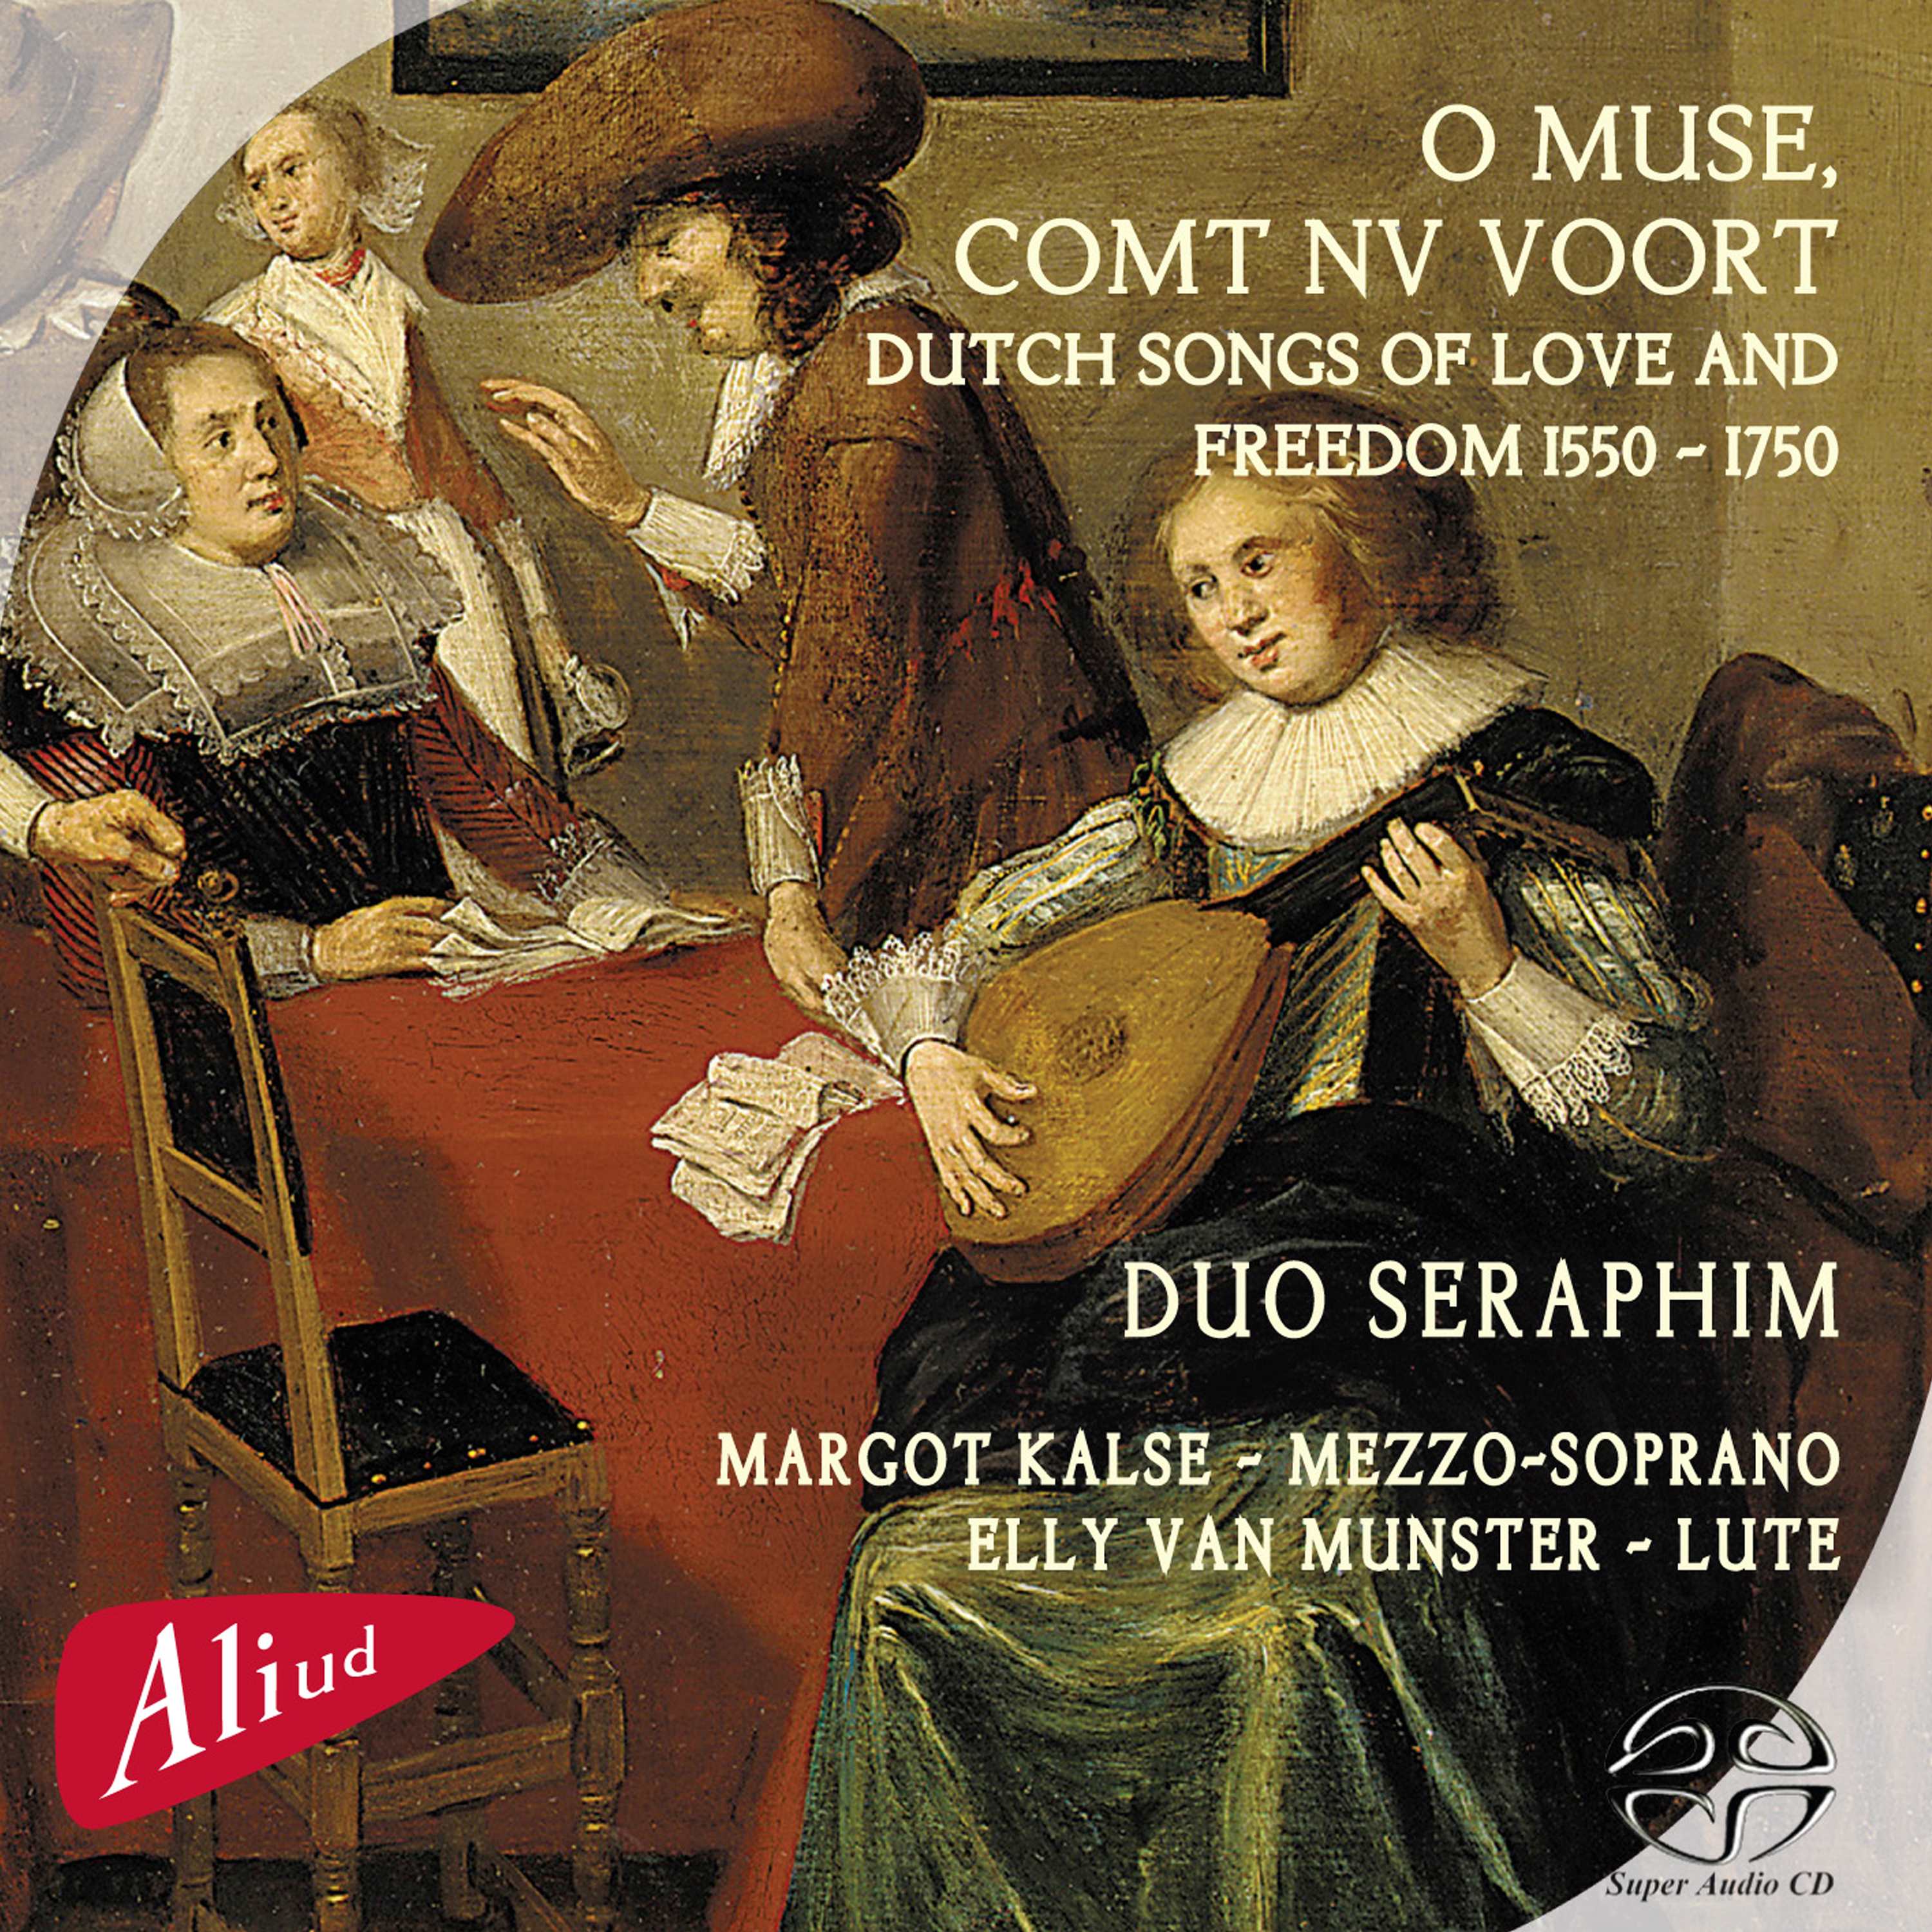 Ens. Duo Seraphim,, lute & mezzo-soprano NL-talig